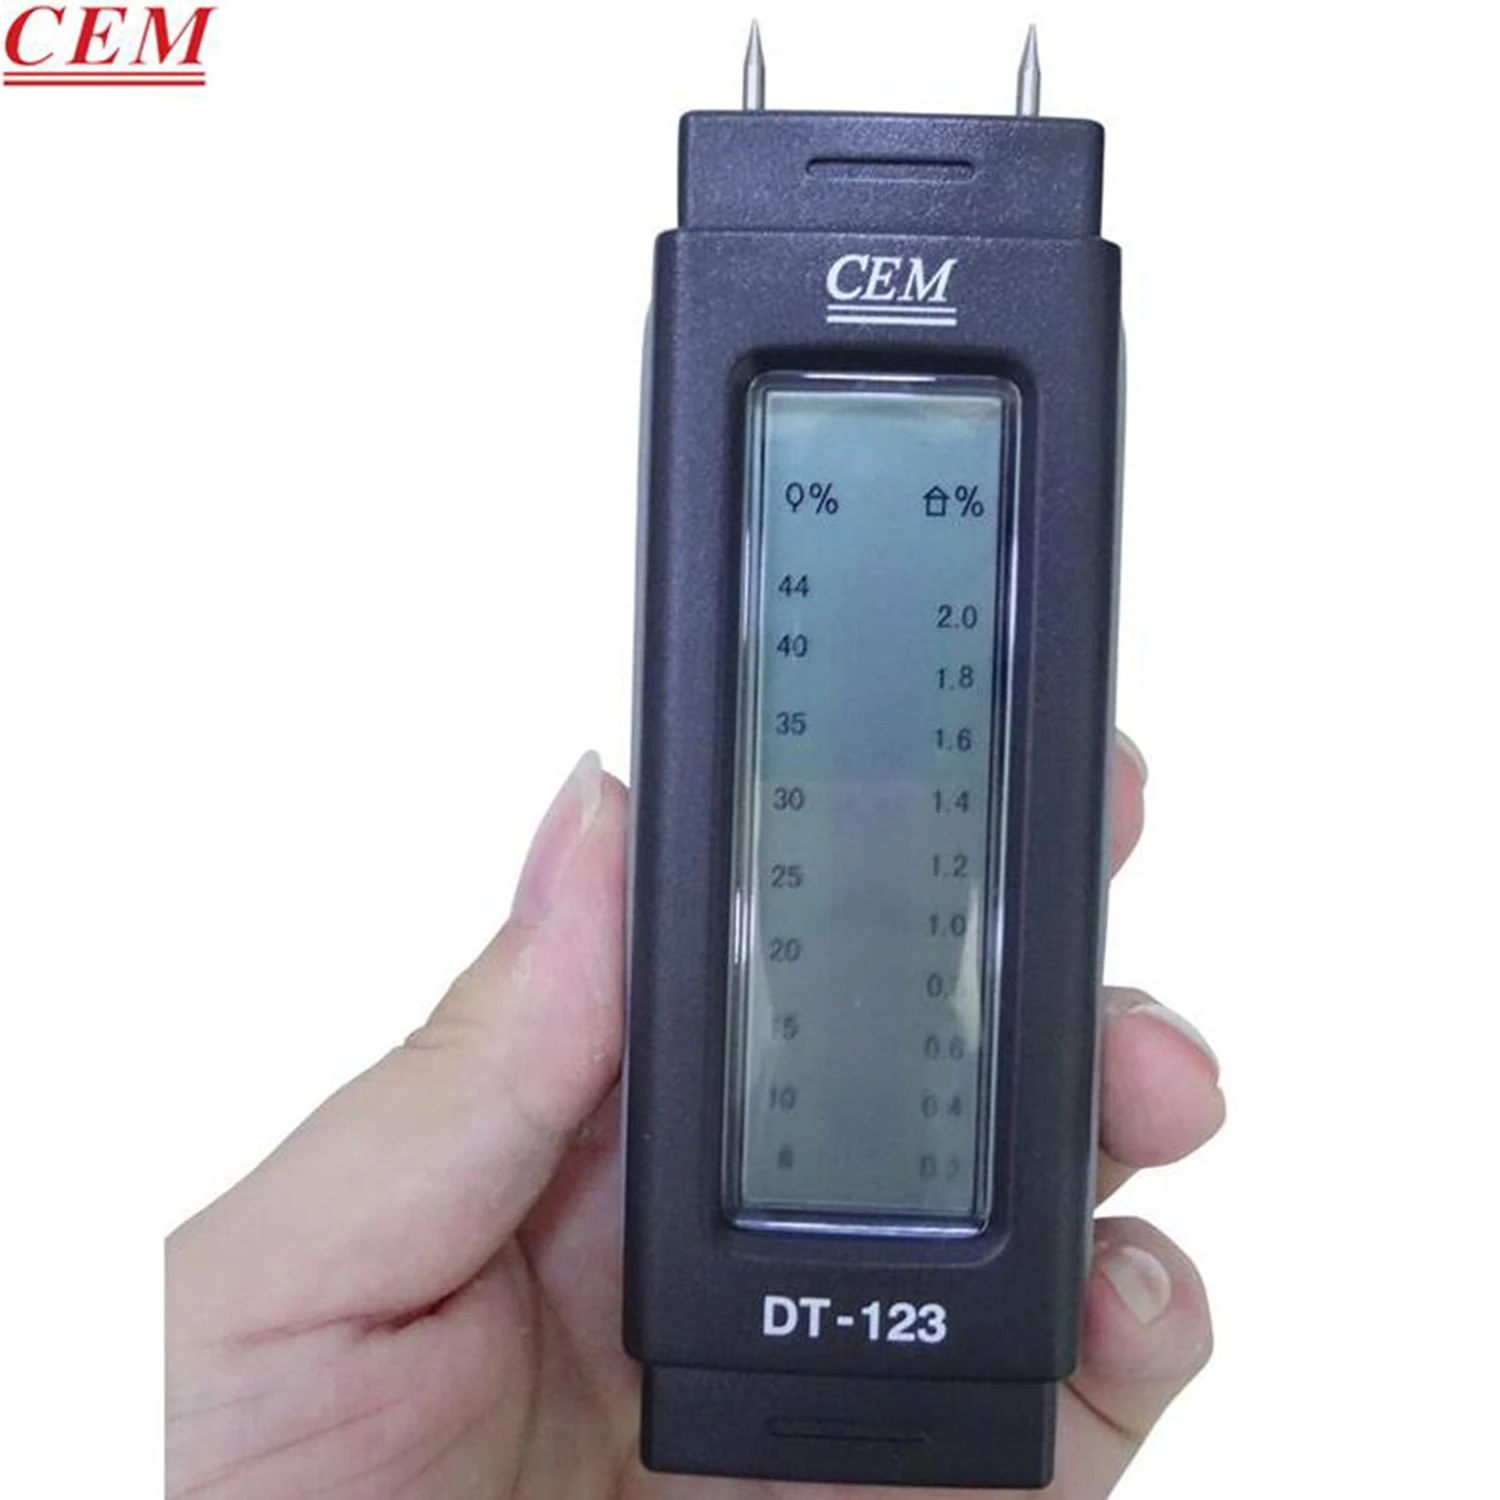 

CEM DT-123 Pocket Portable Miniature Wood Moisture Meter/Cardboard/Gypsum/Concrete/Moisture Content Test Hygrometer,New.